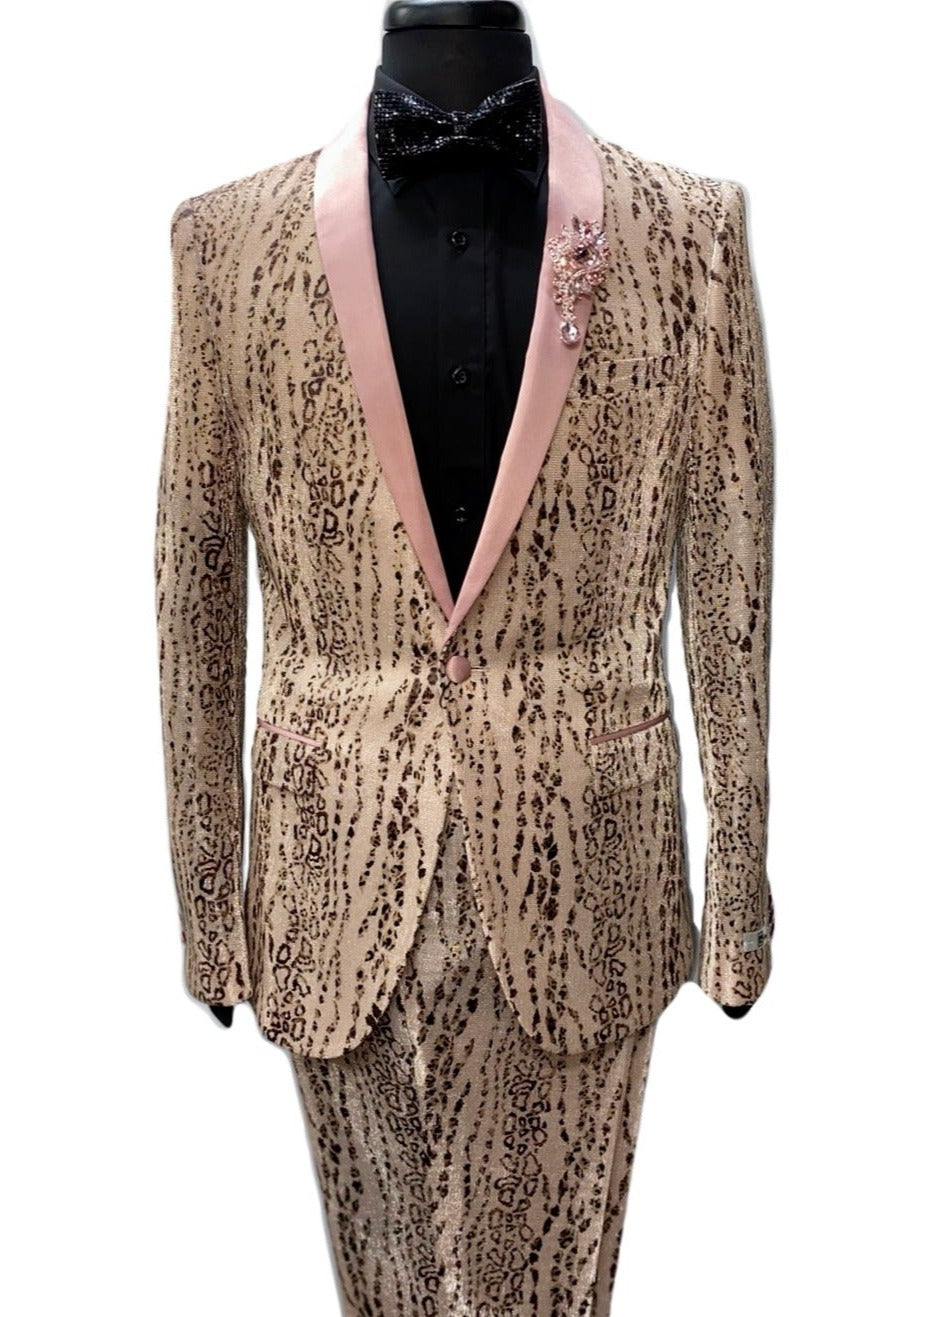 Giovanni Testi Nude & Pink Cheetah Print Suit 